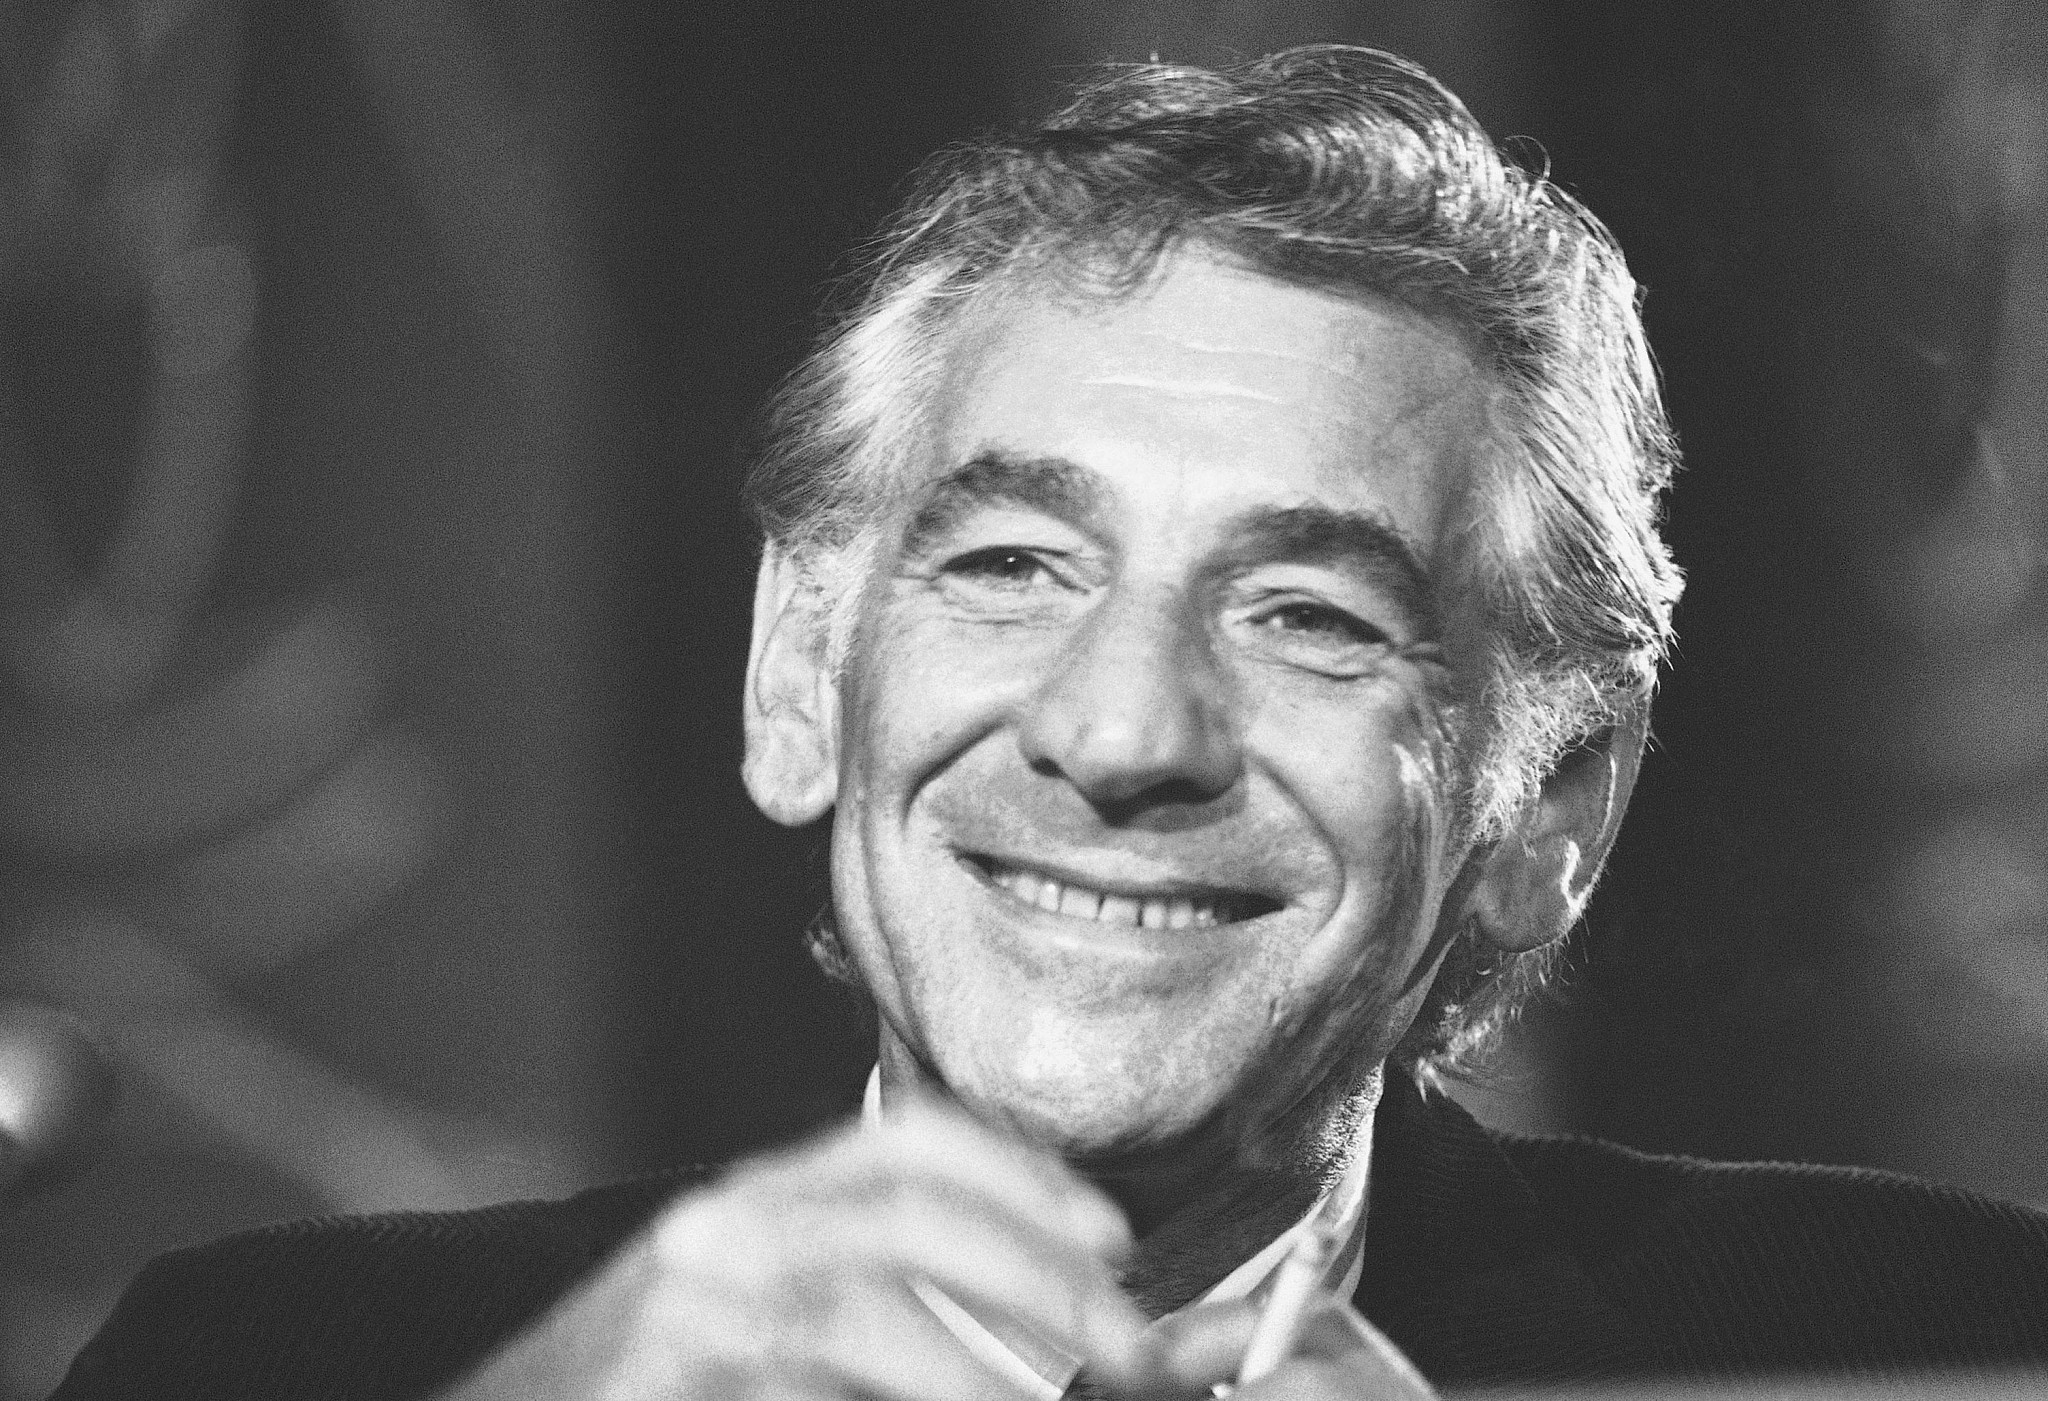 Musical tribute marks 100 years since Leonard Bernstein's birth | The